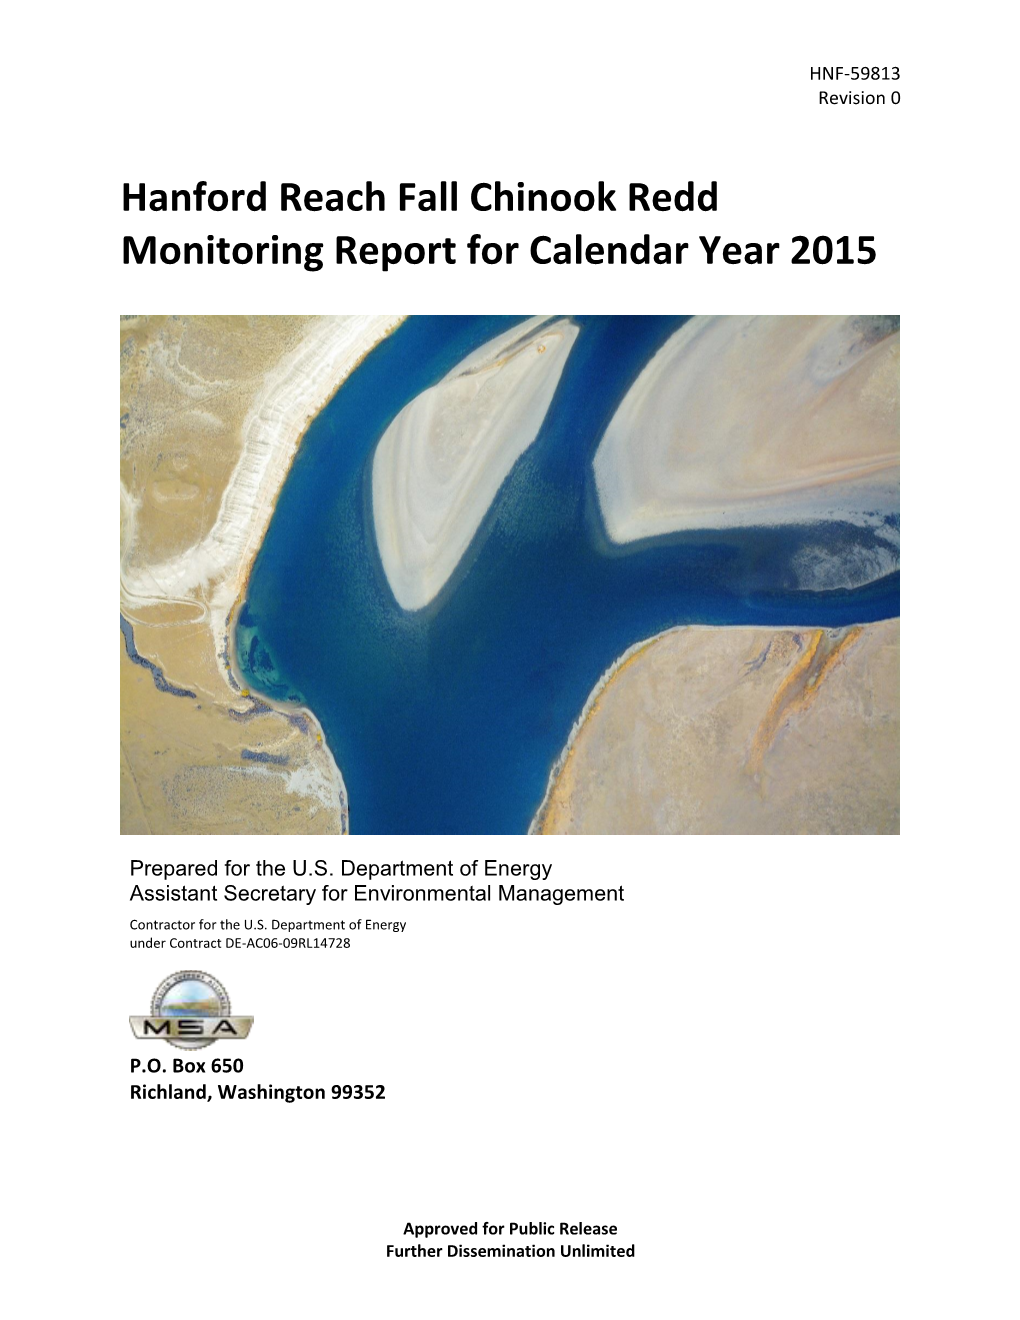 Hanford Reach Fall Chinook Redd Monitoring Report for Calendar Year 2015